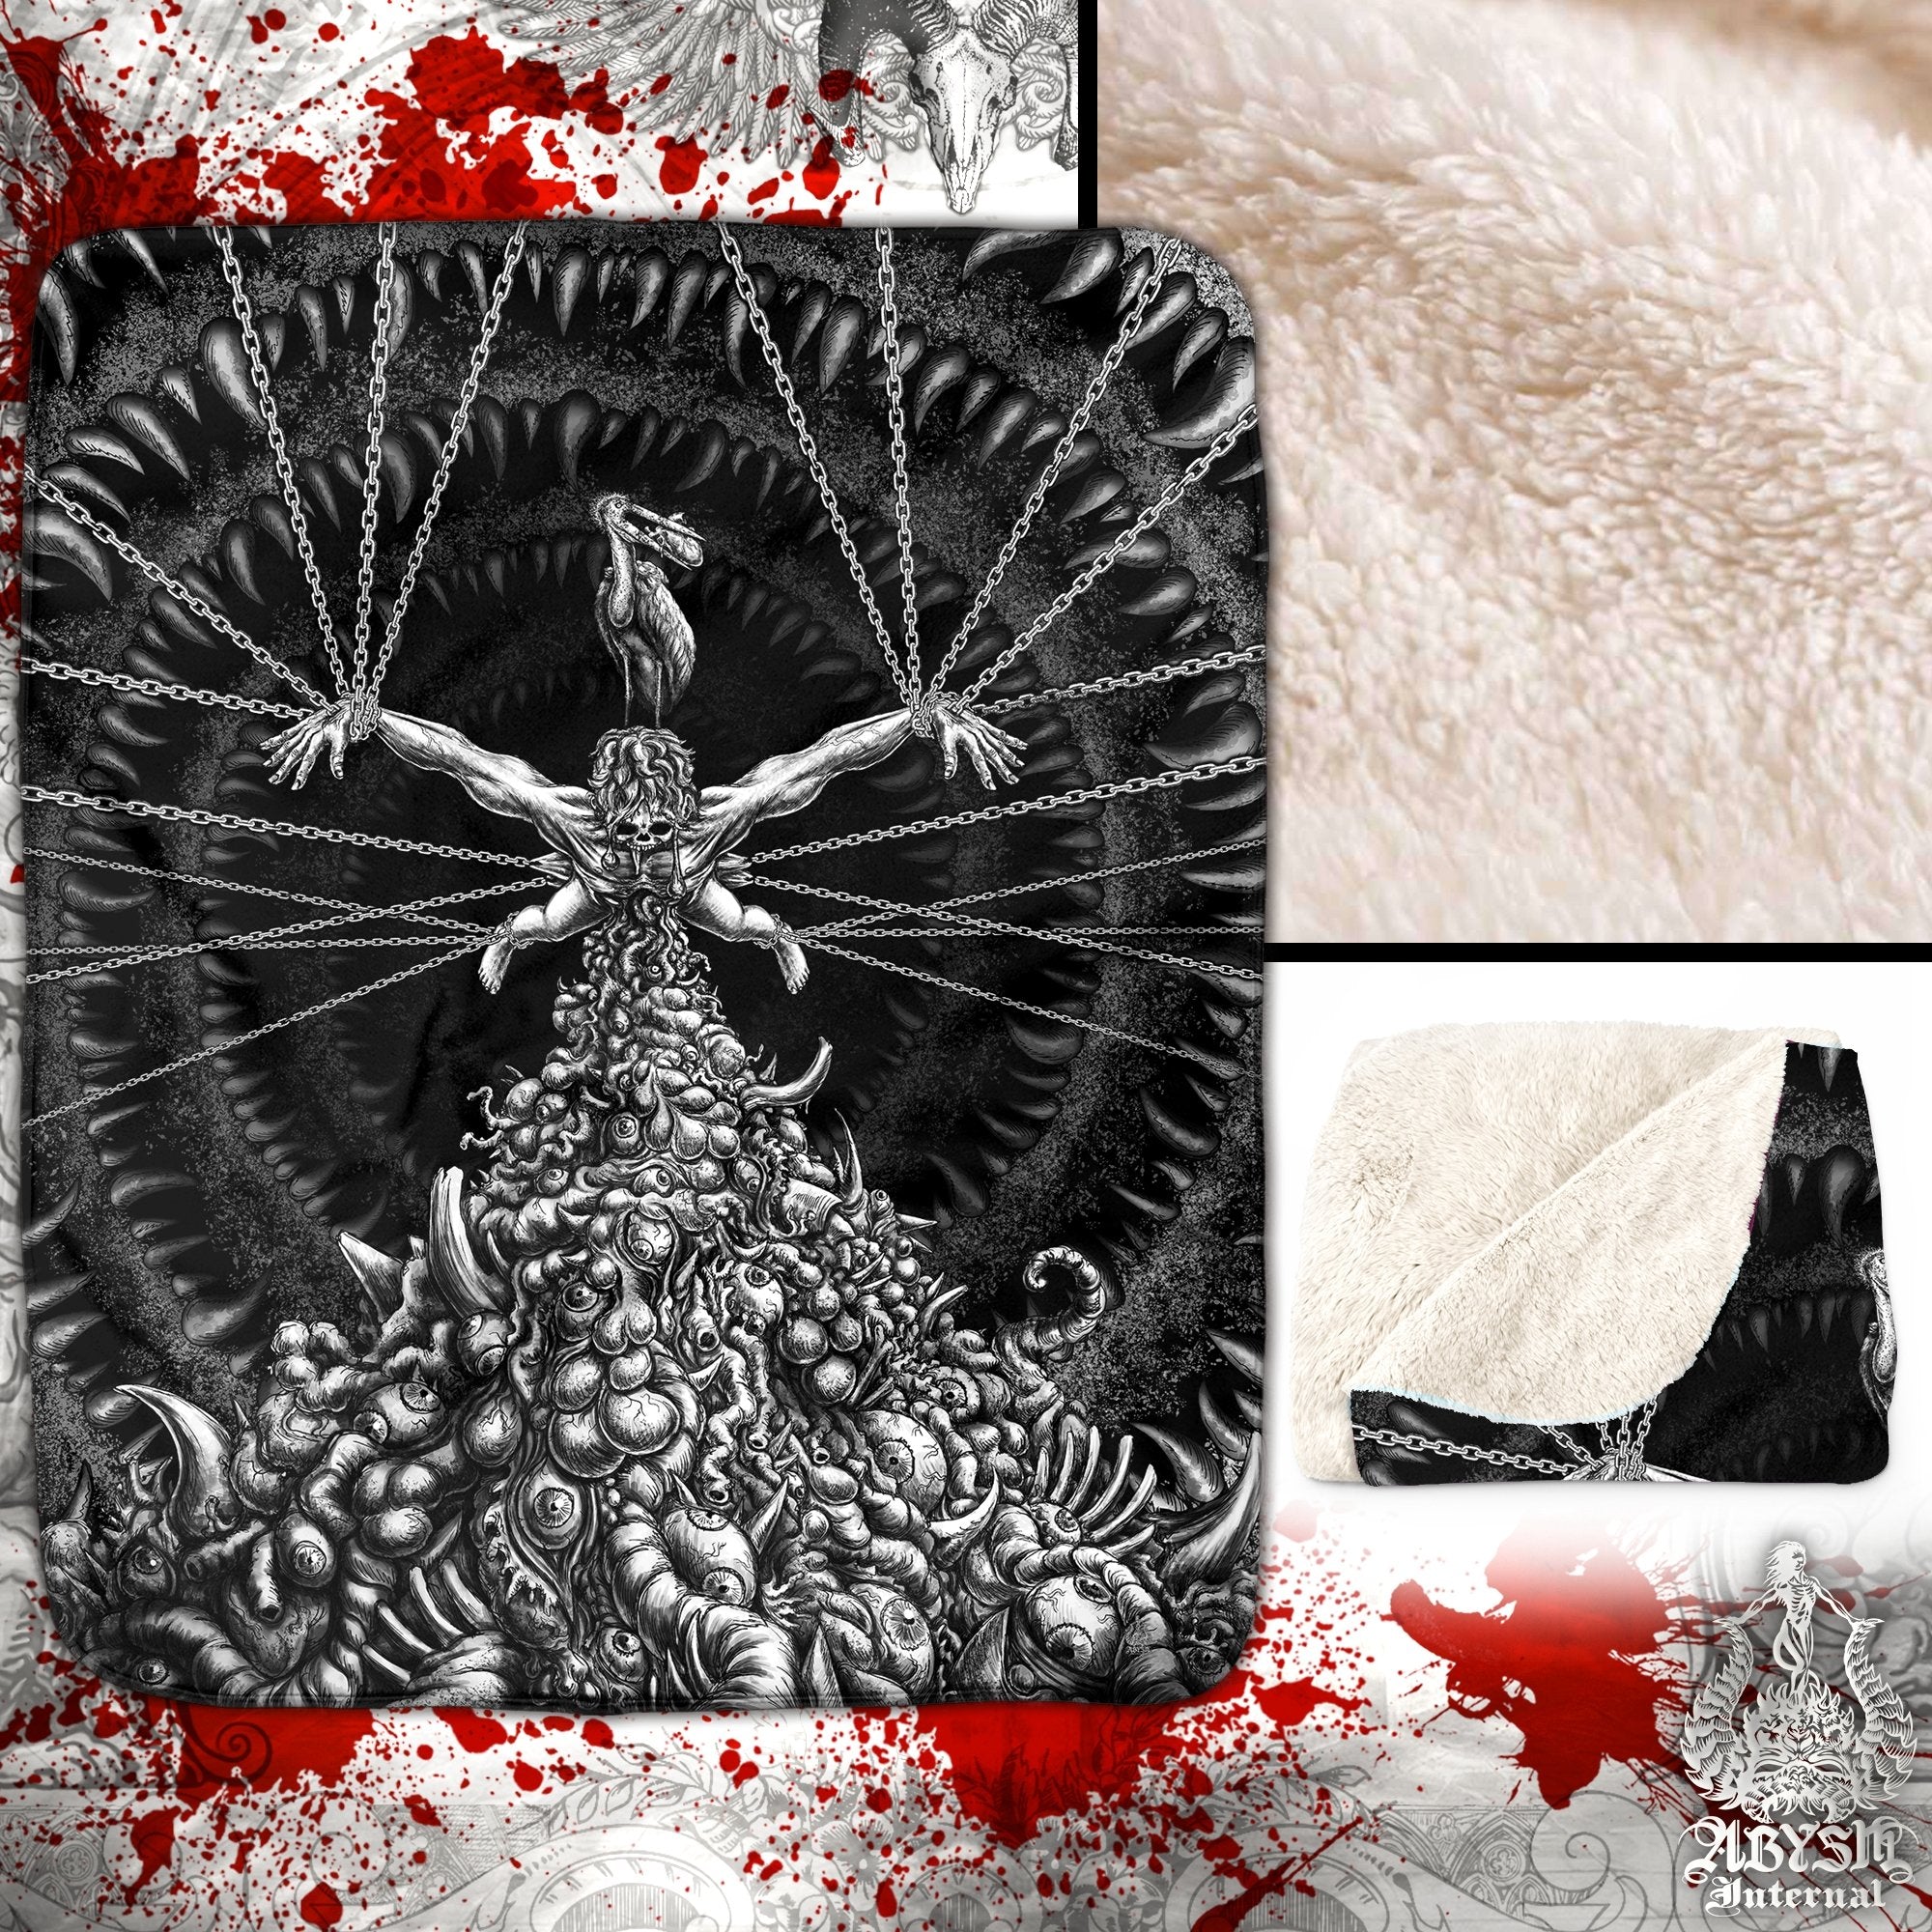 Horror Throw Fleece Blanket, Goth Decor, Dark Fantasy Art, Alternative Art Gift - Gothic Hell, Purging - Abysm Internal